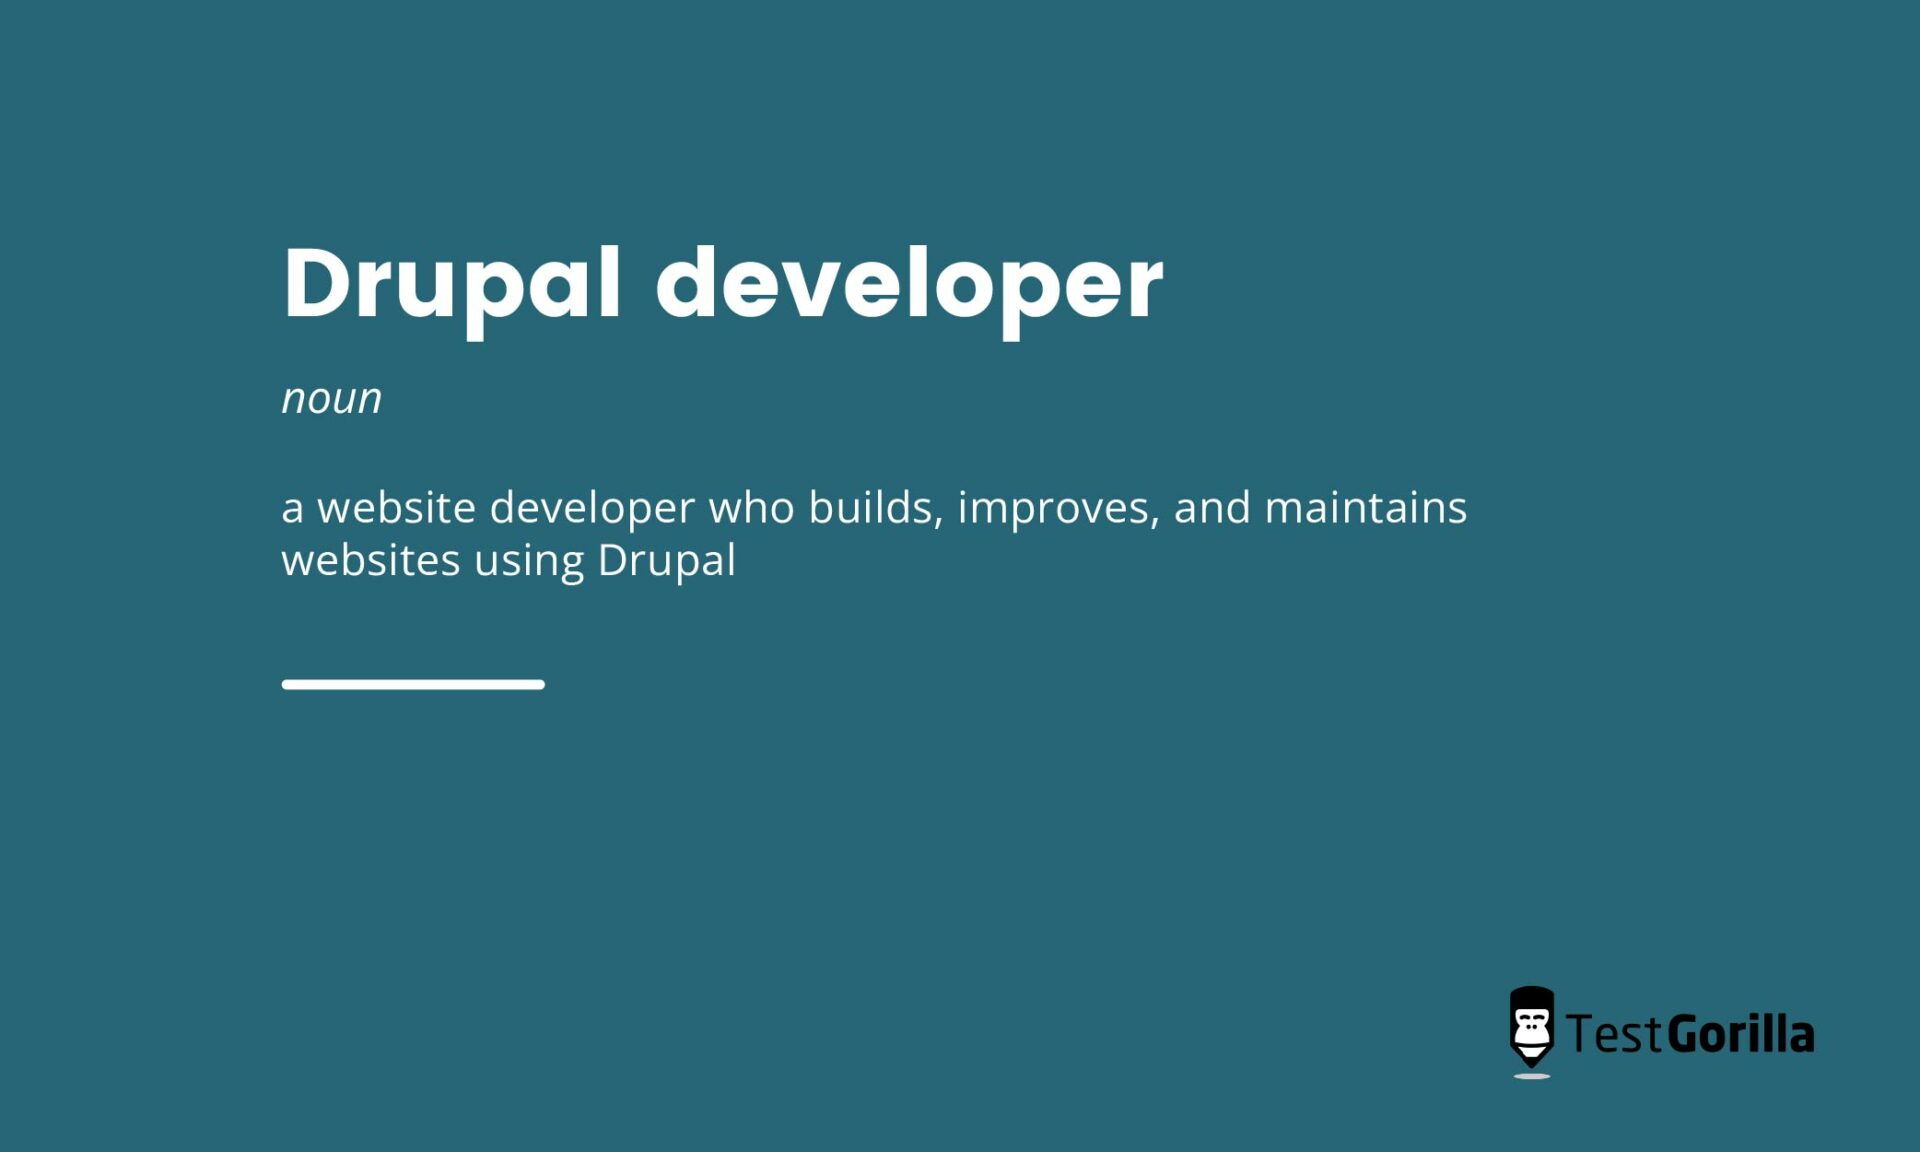 dictionary definition of a drupal developer